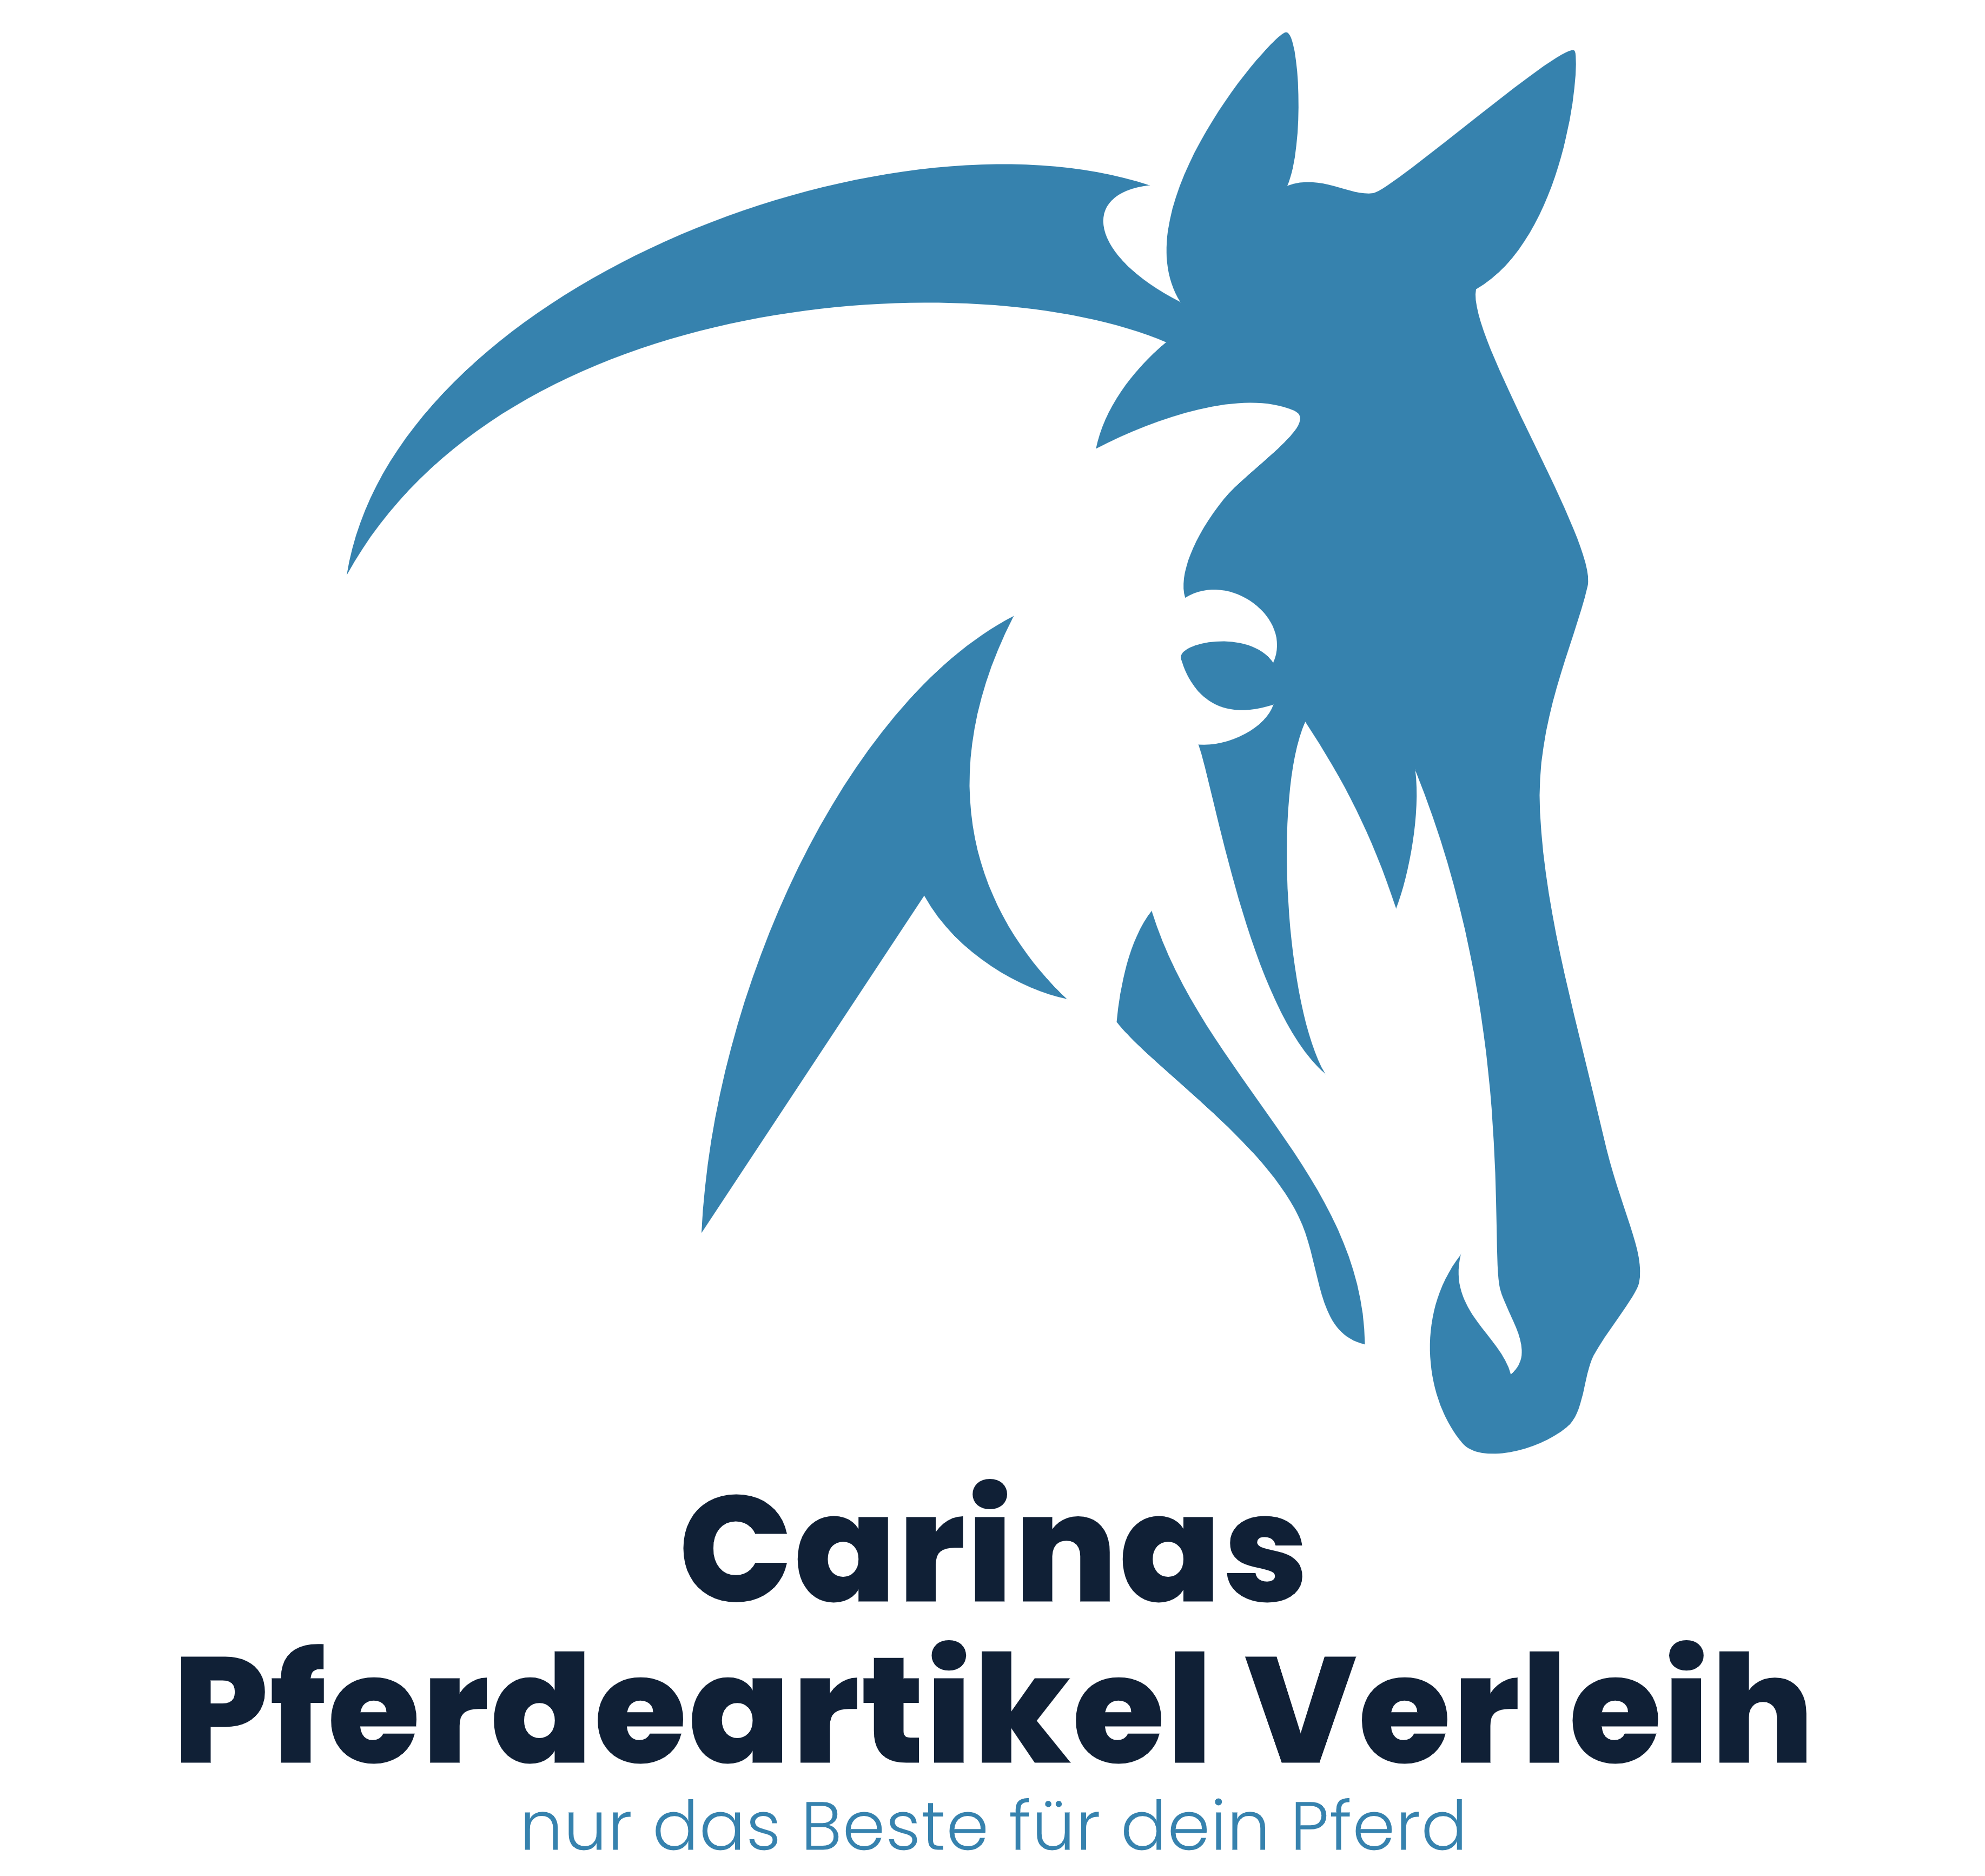 Carinas Pferdeartikel Verleih